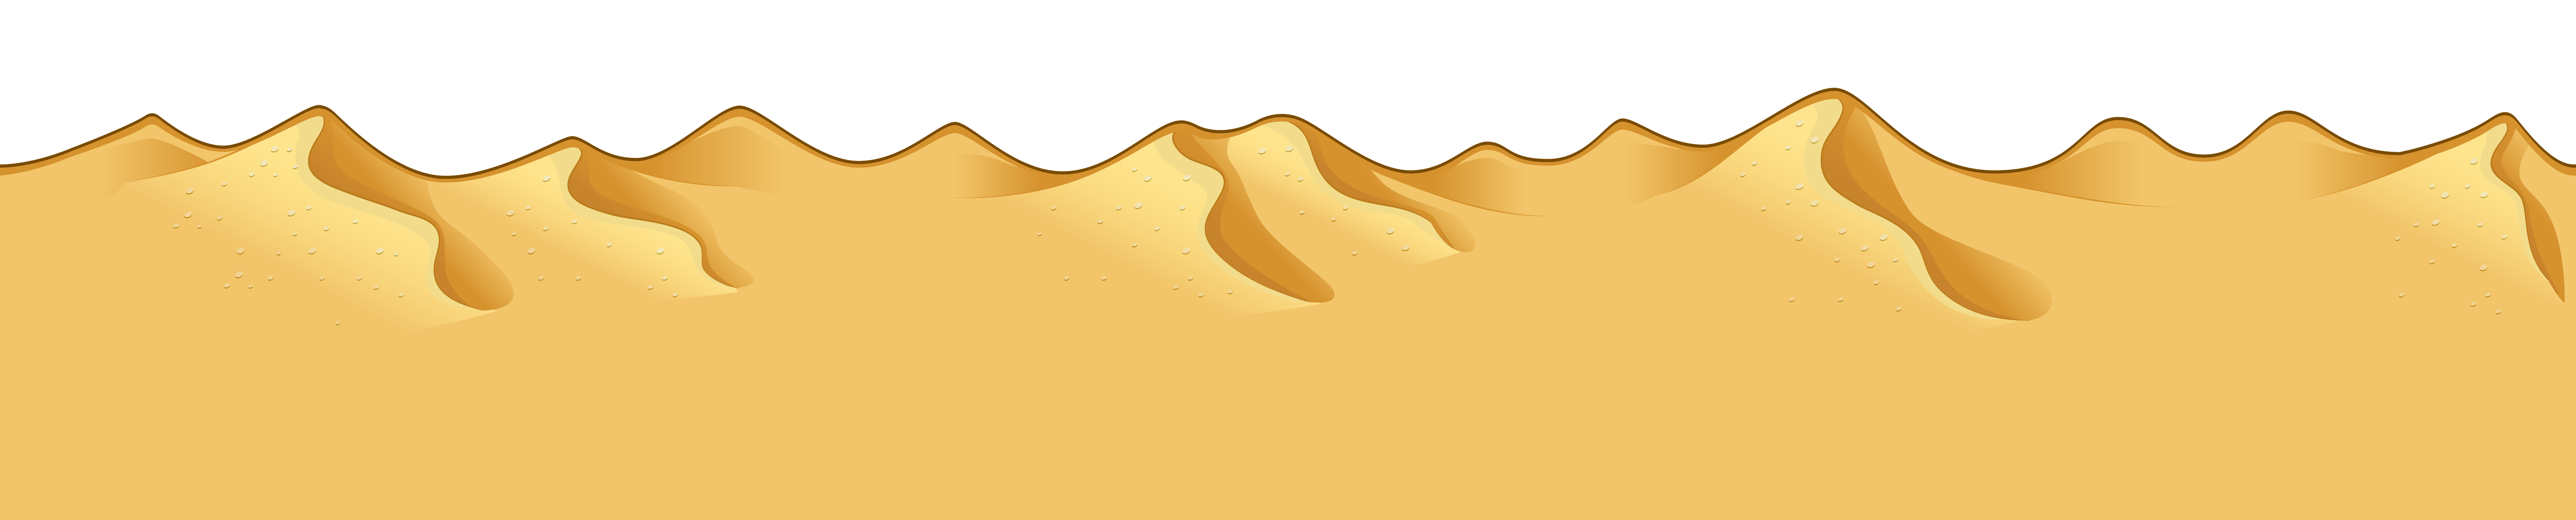 florida clipart sand